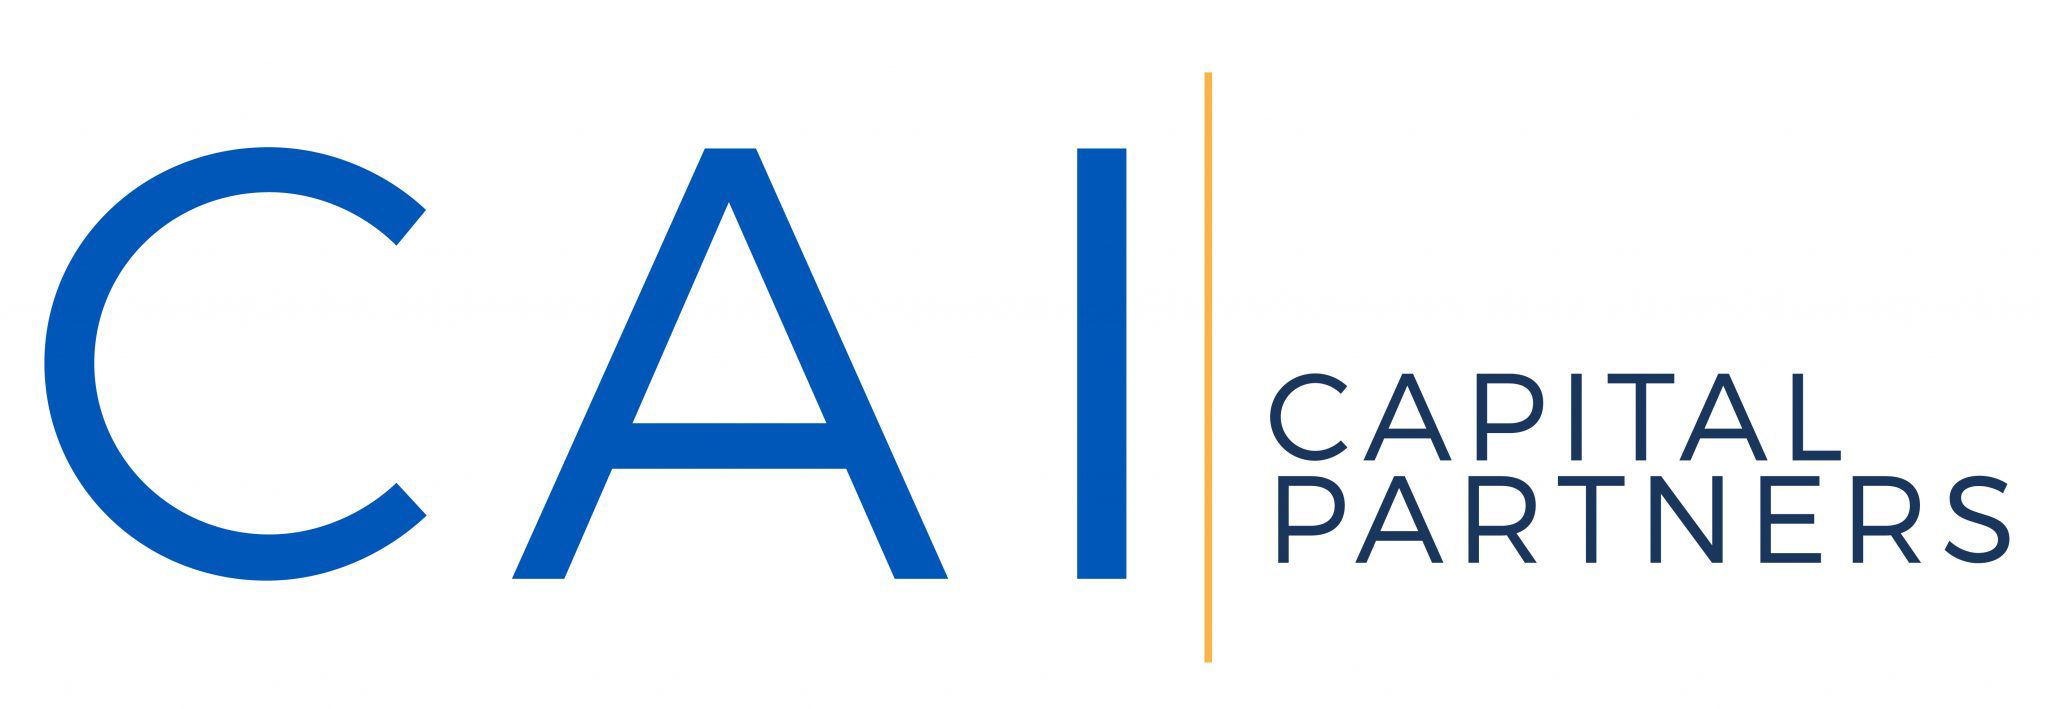 CAI Capital Partners